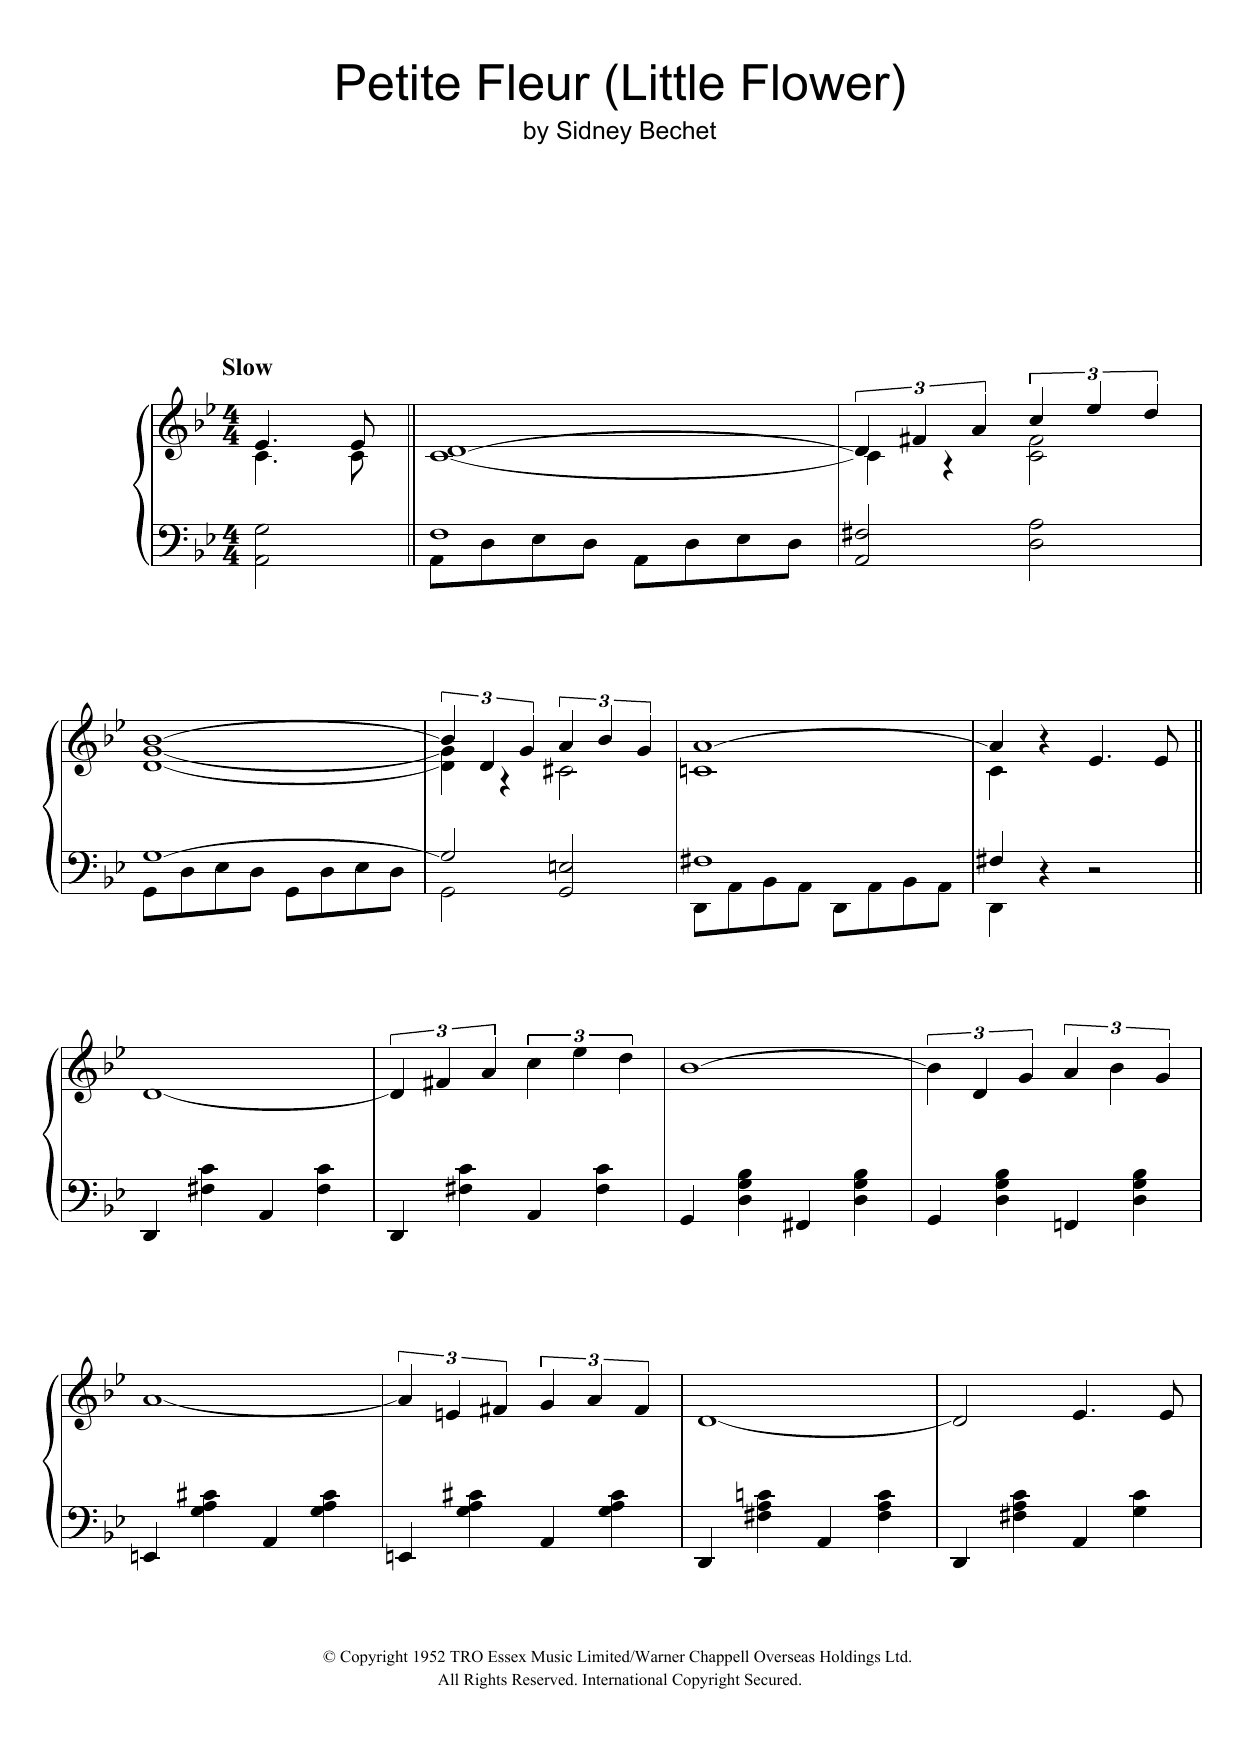 Chris Barber's Jazz Band "Petite Fleur (Little Flower)" Sheet Music PDF Notes, Chords Jazz Score Solo Download Printable. SKU: